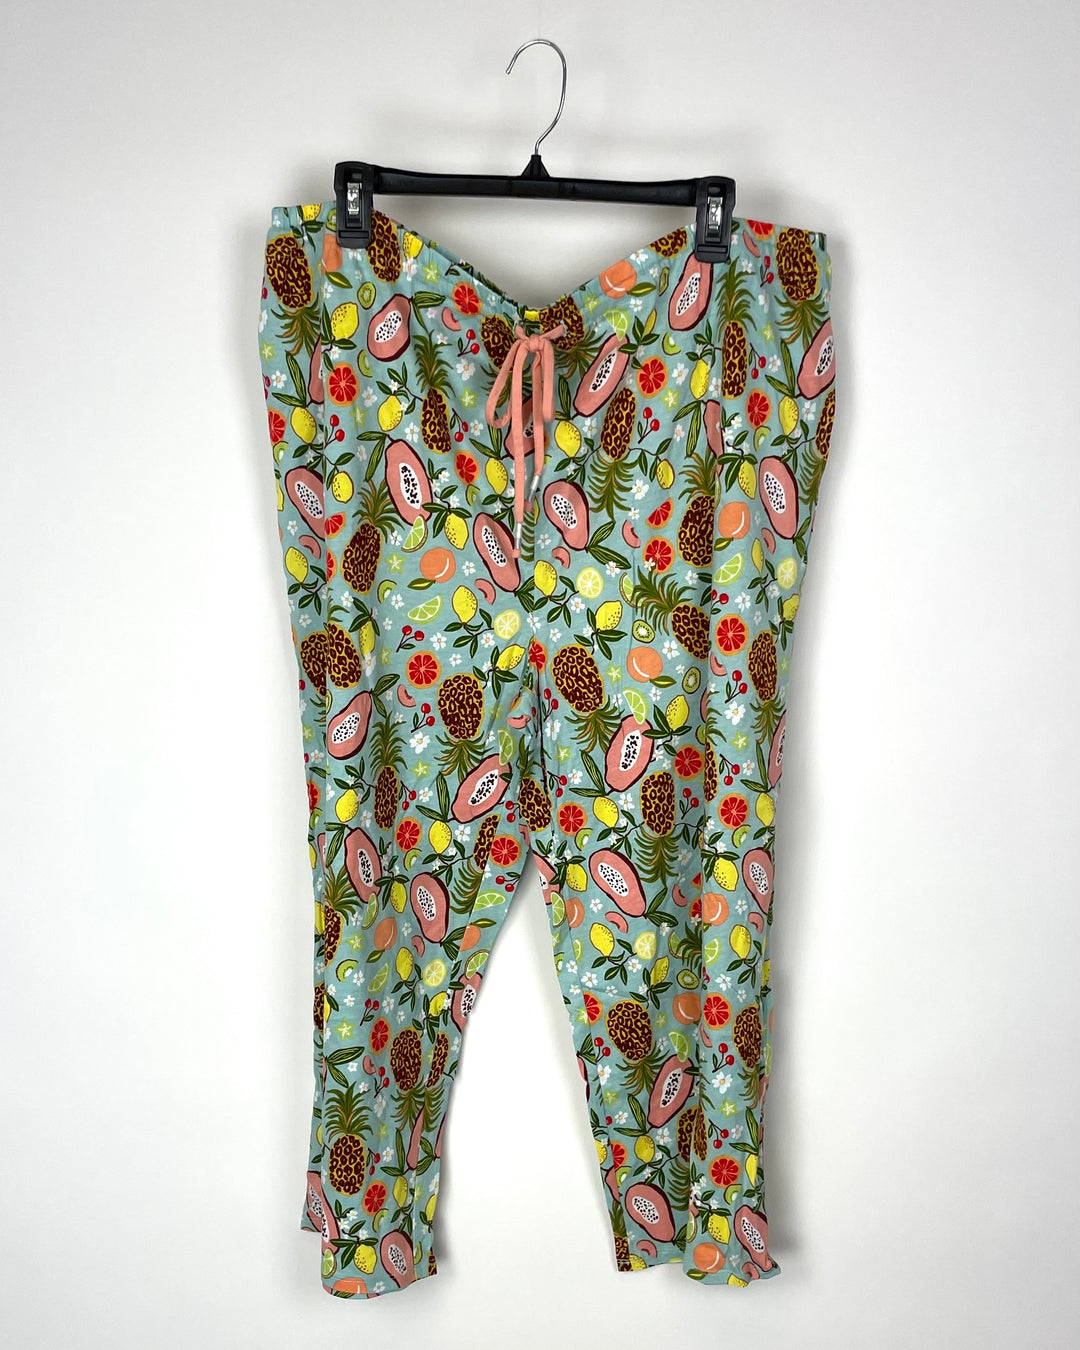 Fruit Printed Multi-Colored Pajama Pants - 1X